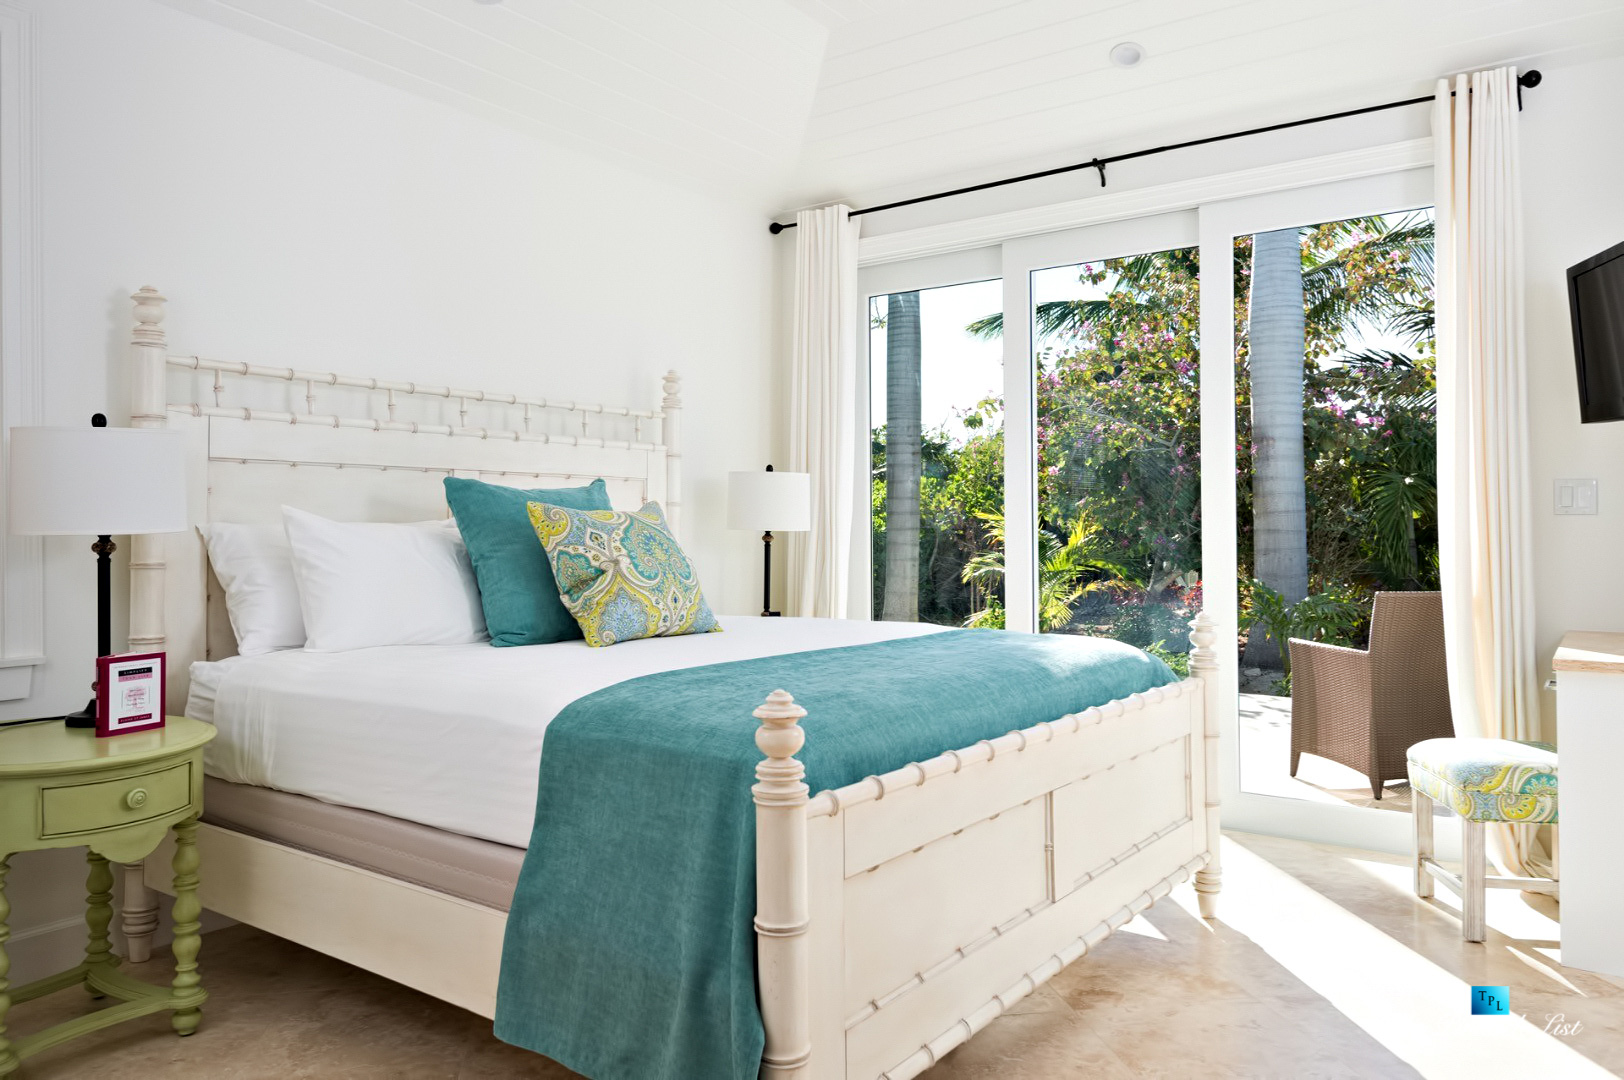 Villa Aquazure - Providenciales, Turks and Caicos Islands - Bedroom - Luxury Real Estate - Beachfront Home